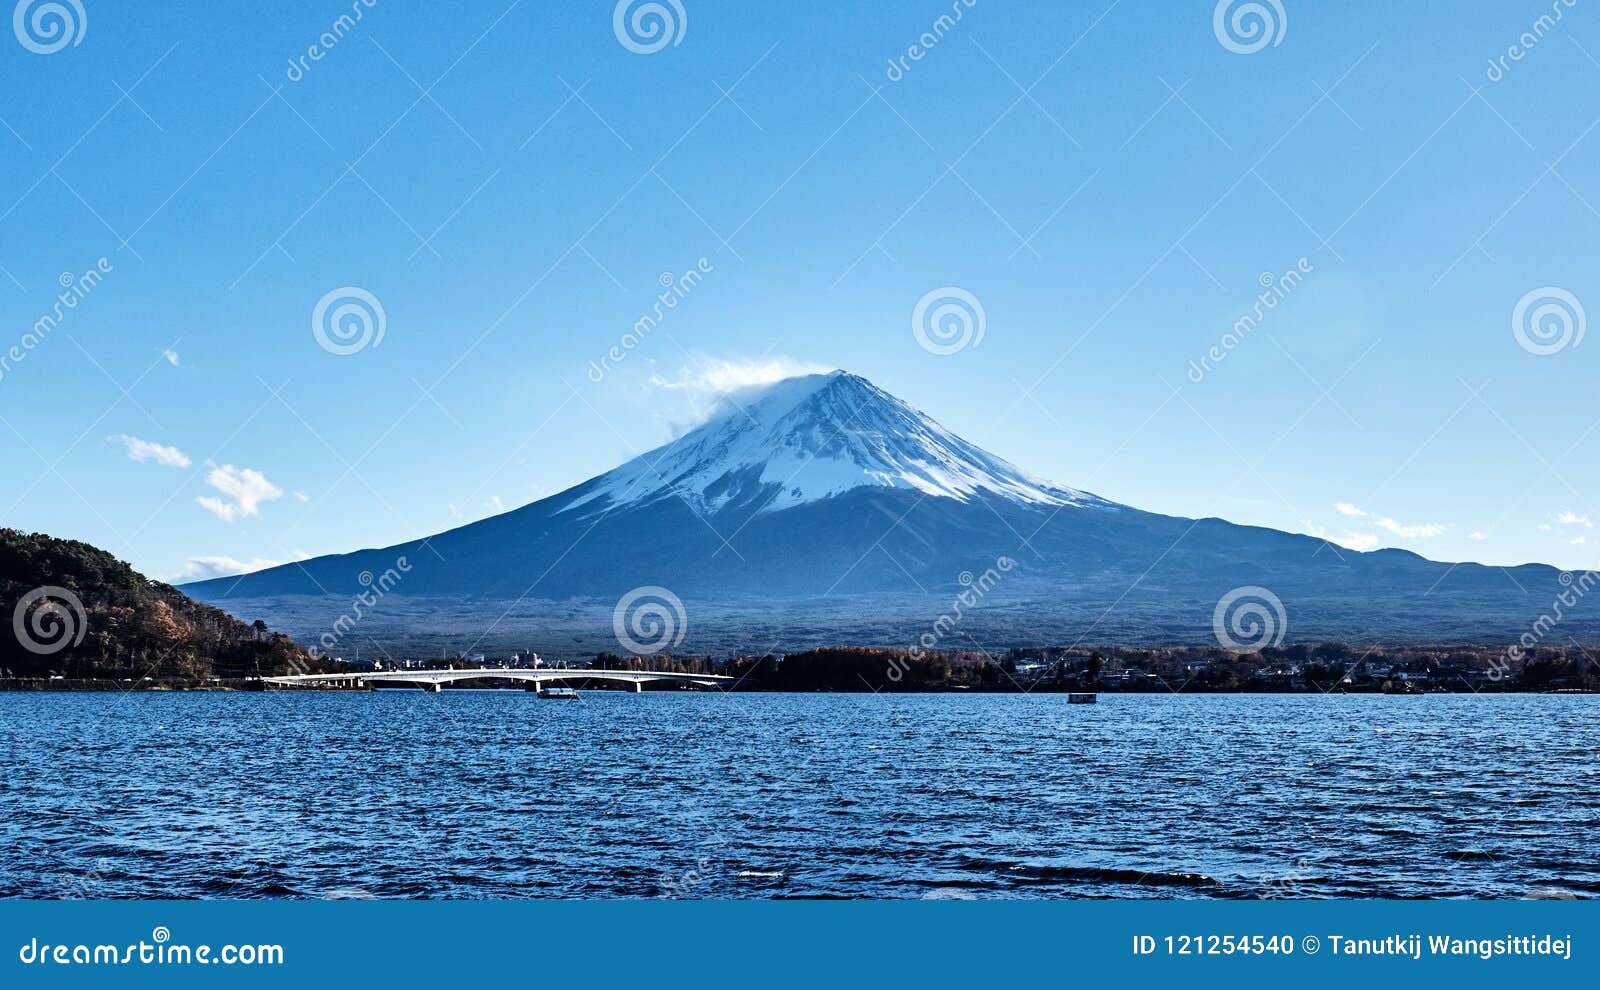 beautiful view mt.fuji with snow capped, blue sky and the bridge at kawaguchiko lake, japan.